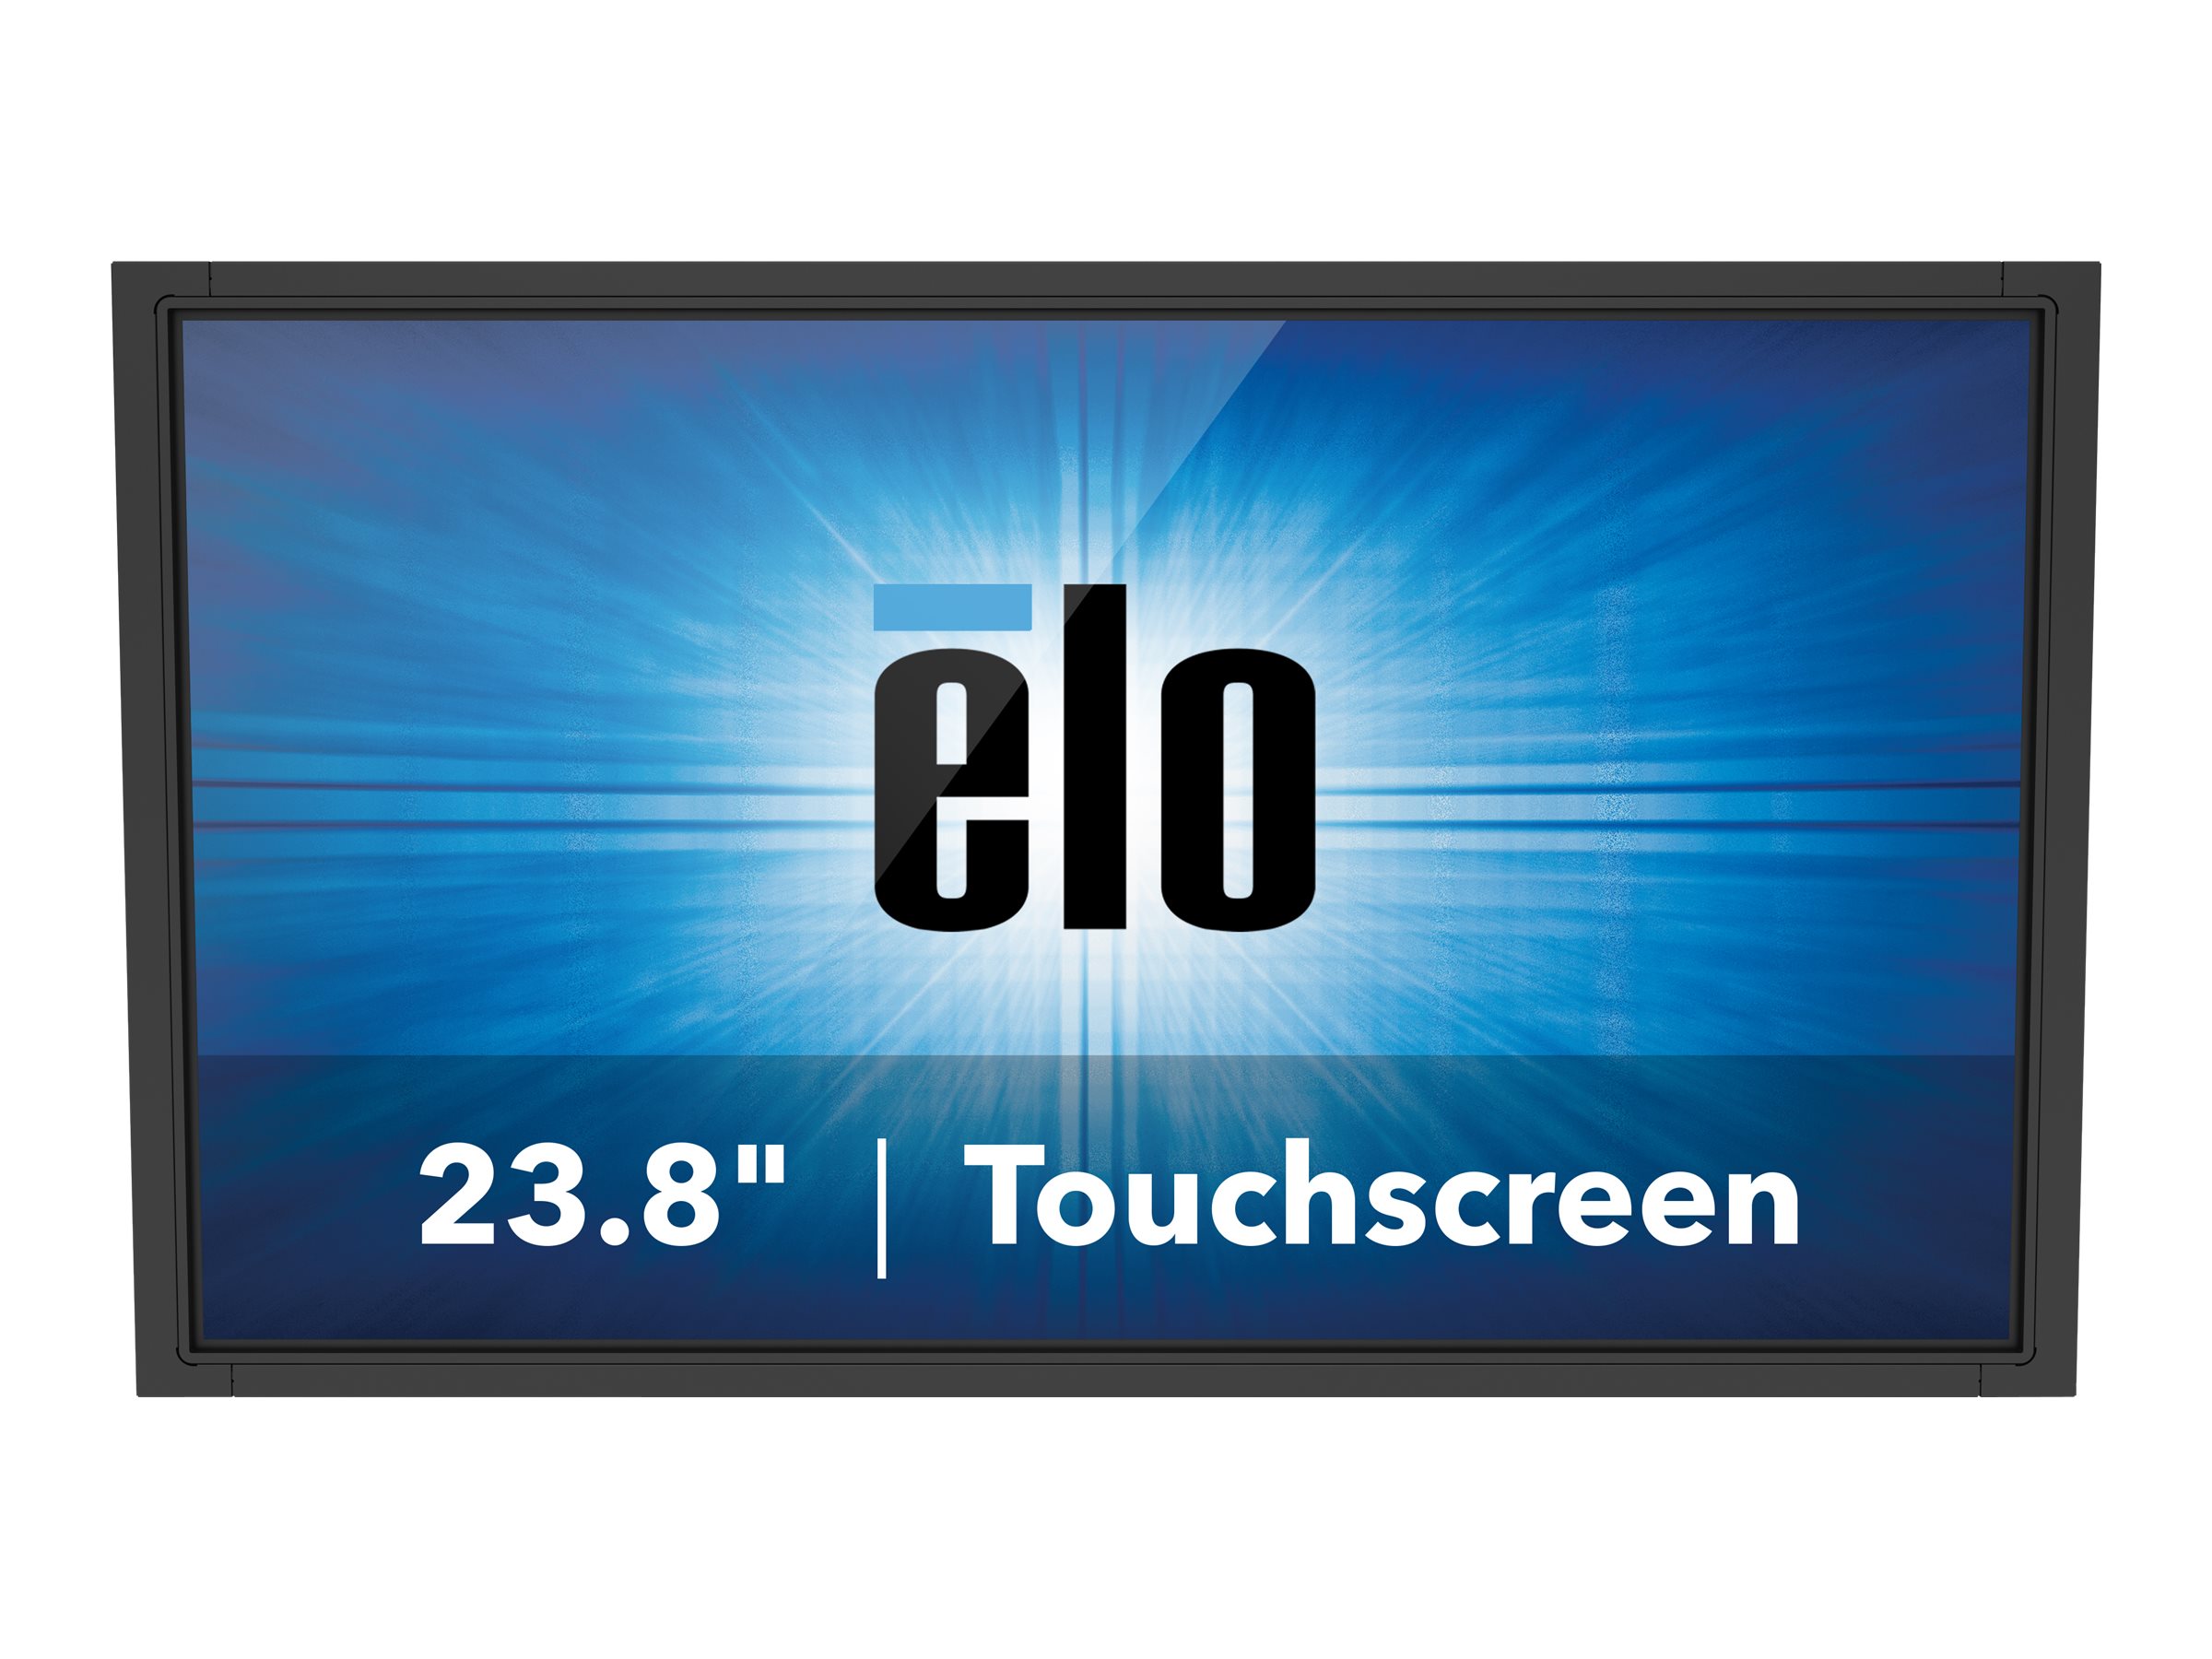 Elo 2494L - 90-Series - LED-Monitor - 60.5 cm (23.8